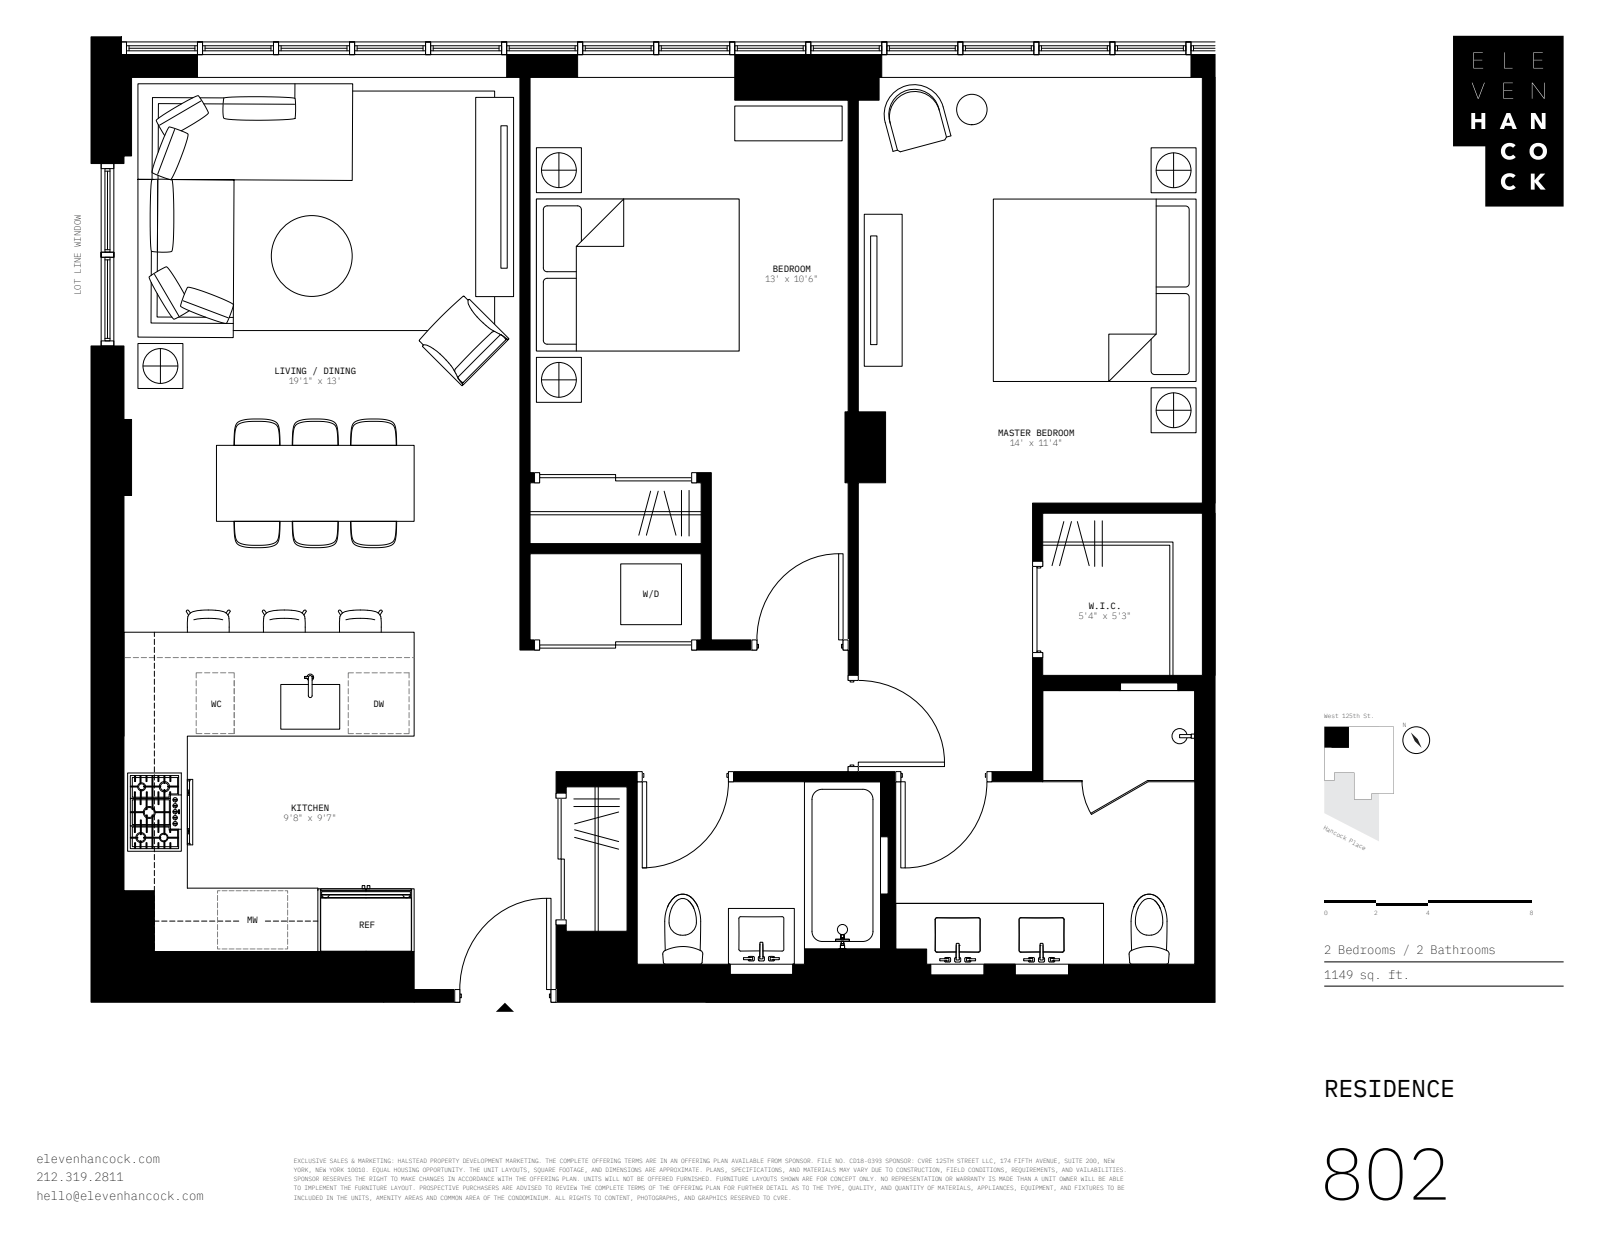 Floorplan for 11 Hancock Place, 802